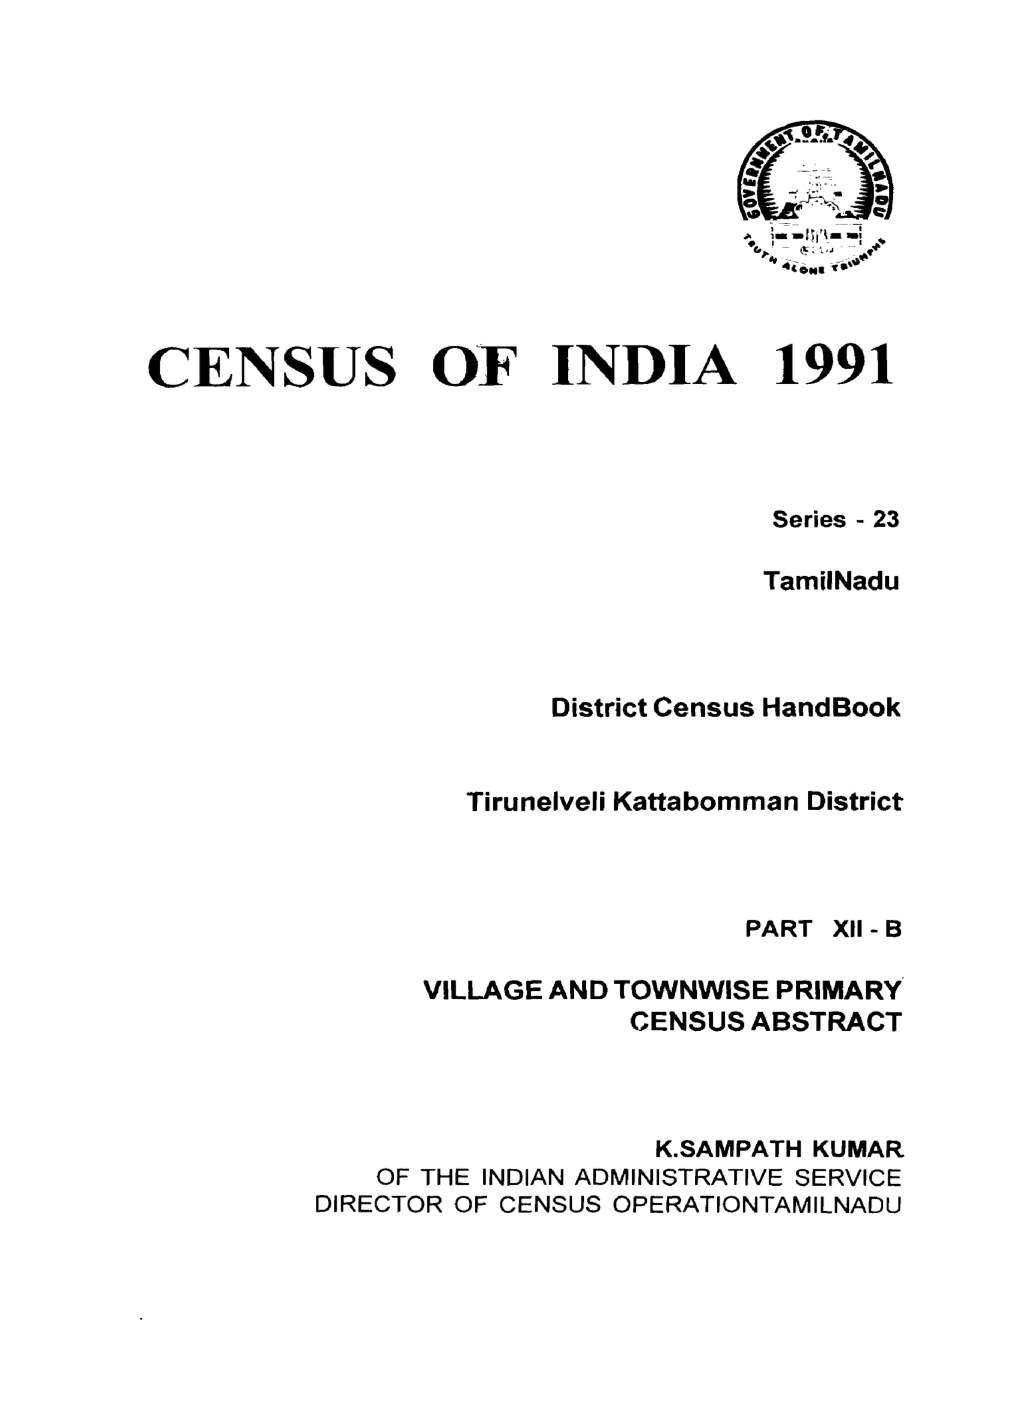 District Census Handbook, Tirunelveli Kattabomman, Part XII-B, Series-23